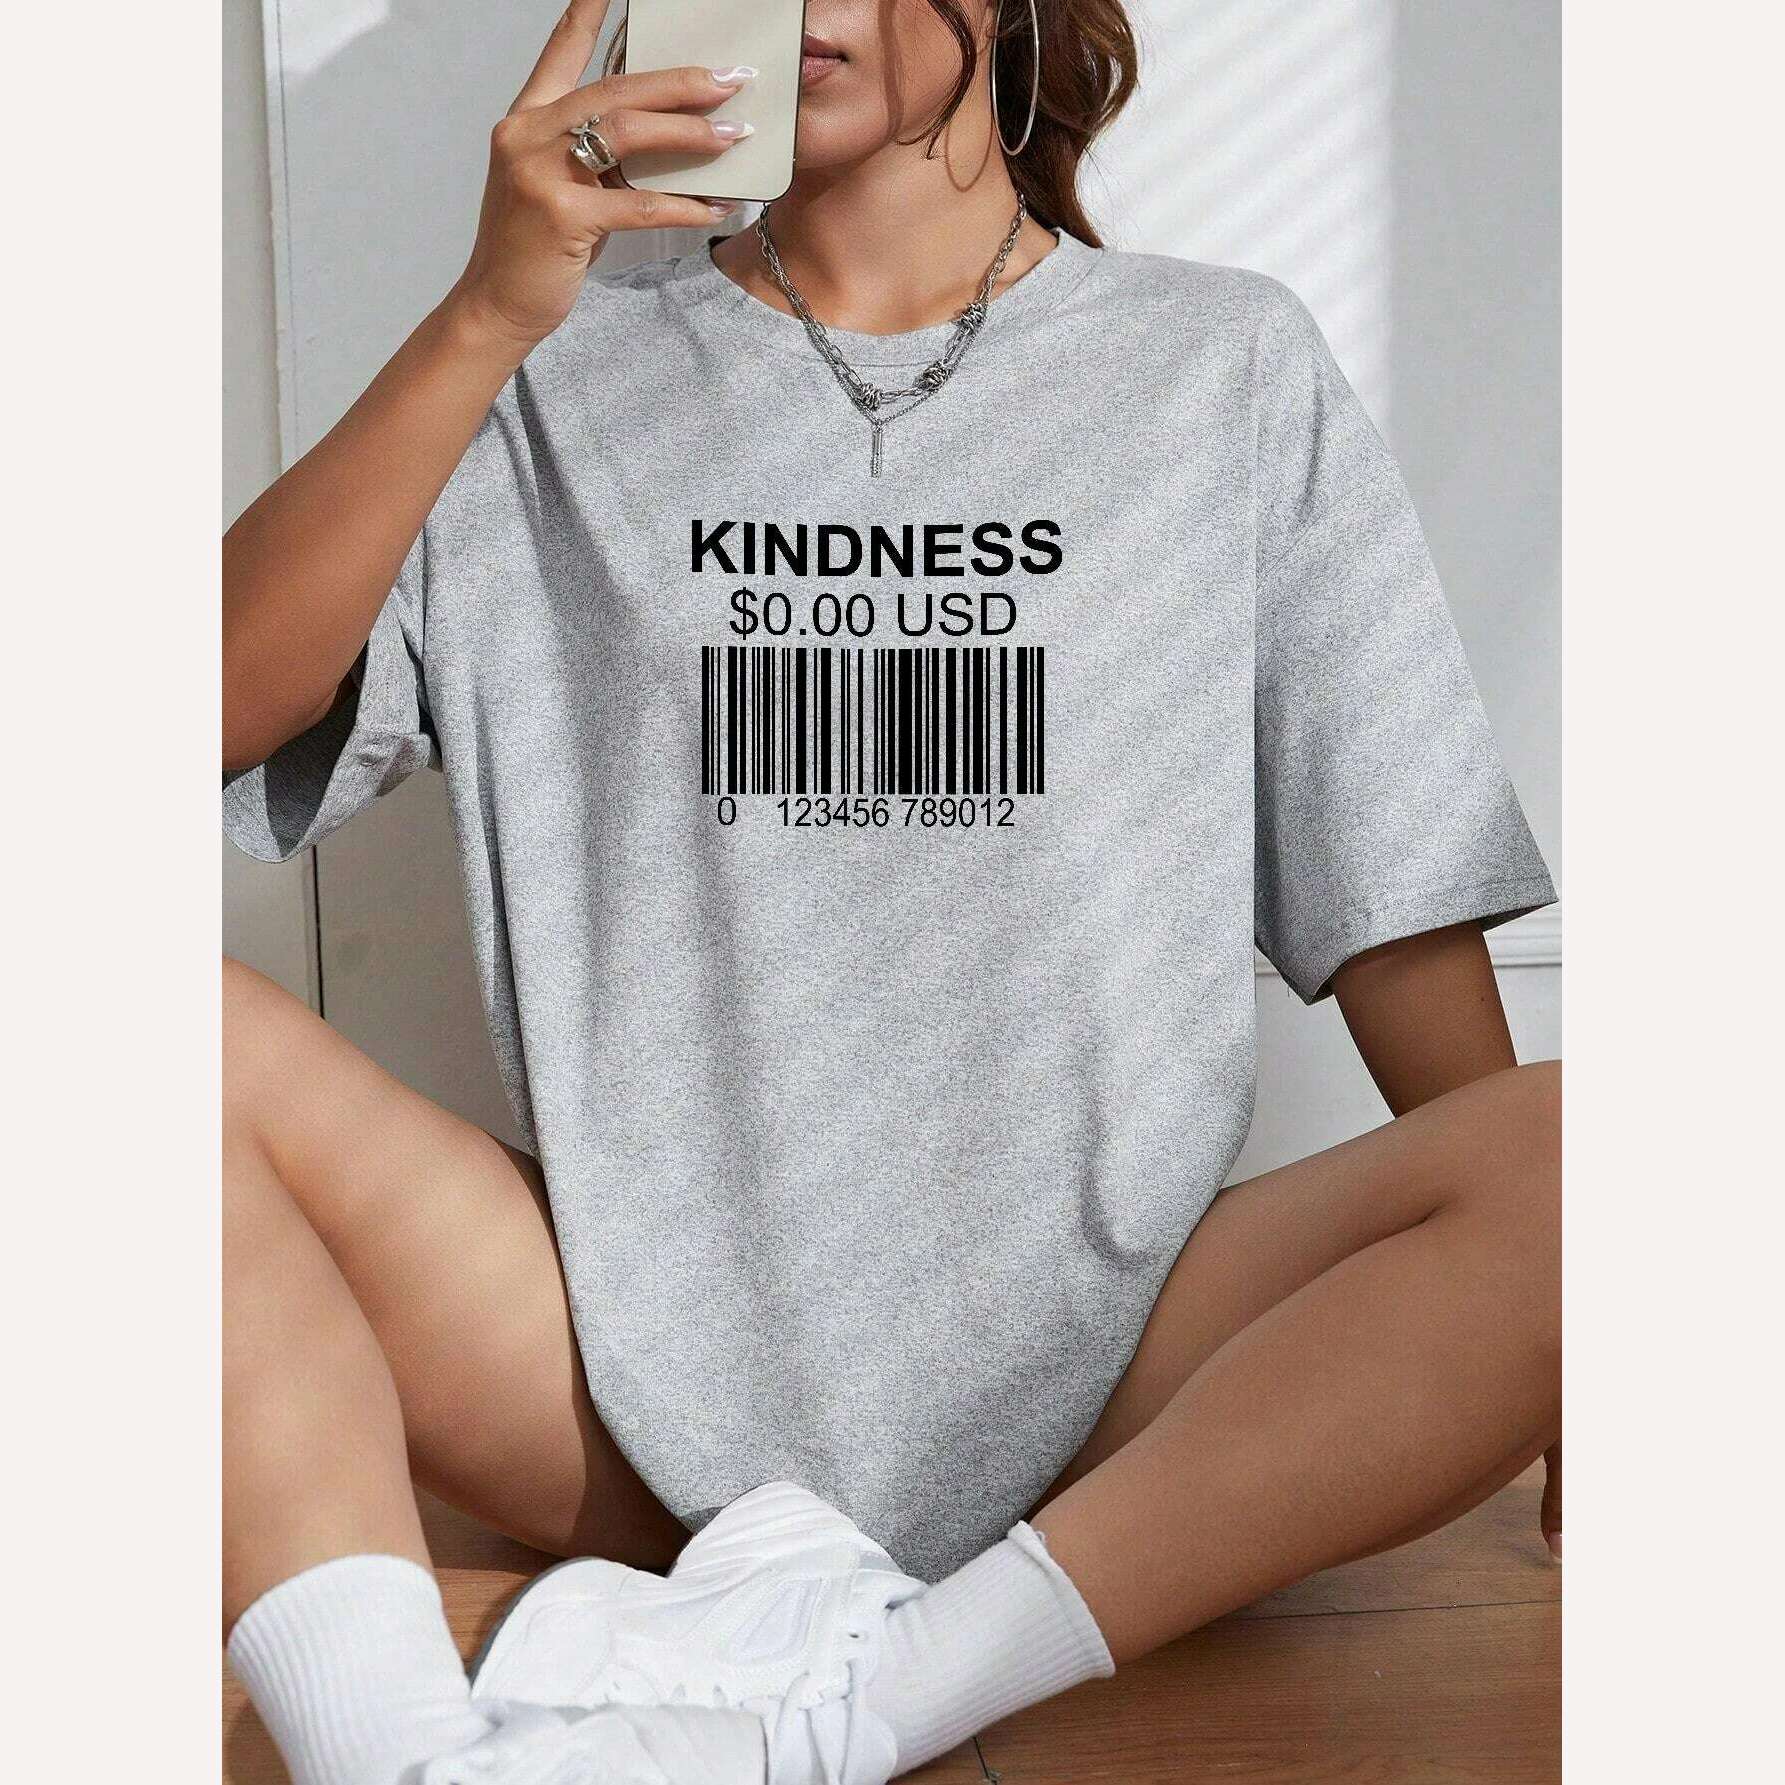 KIMLUD, Kindness Creative Bar Code Creativity Womens Short Sleeve Funny Casual Oversize Tops All-math Trend T-Shirts Woman Tee Clothing, KIMLUD Women's Clothes